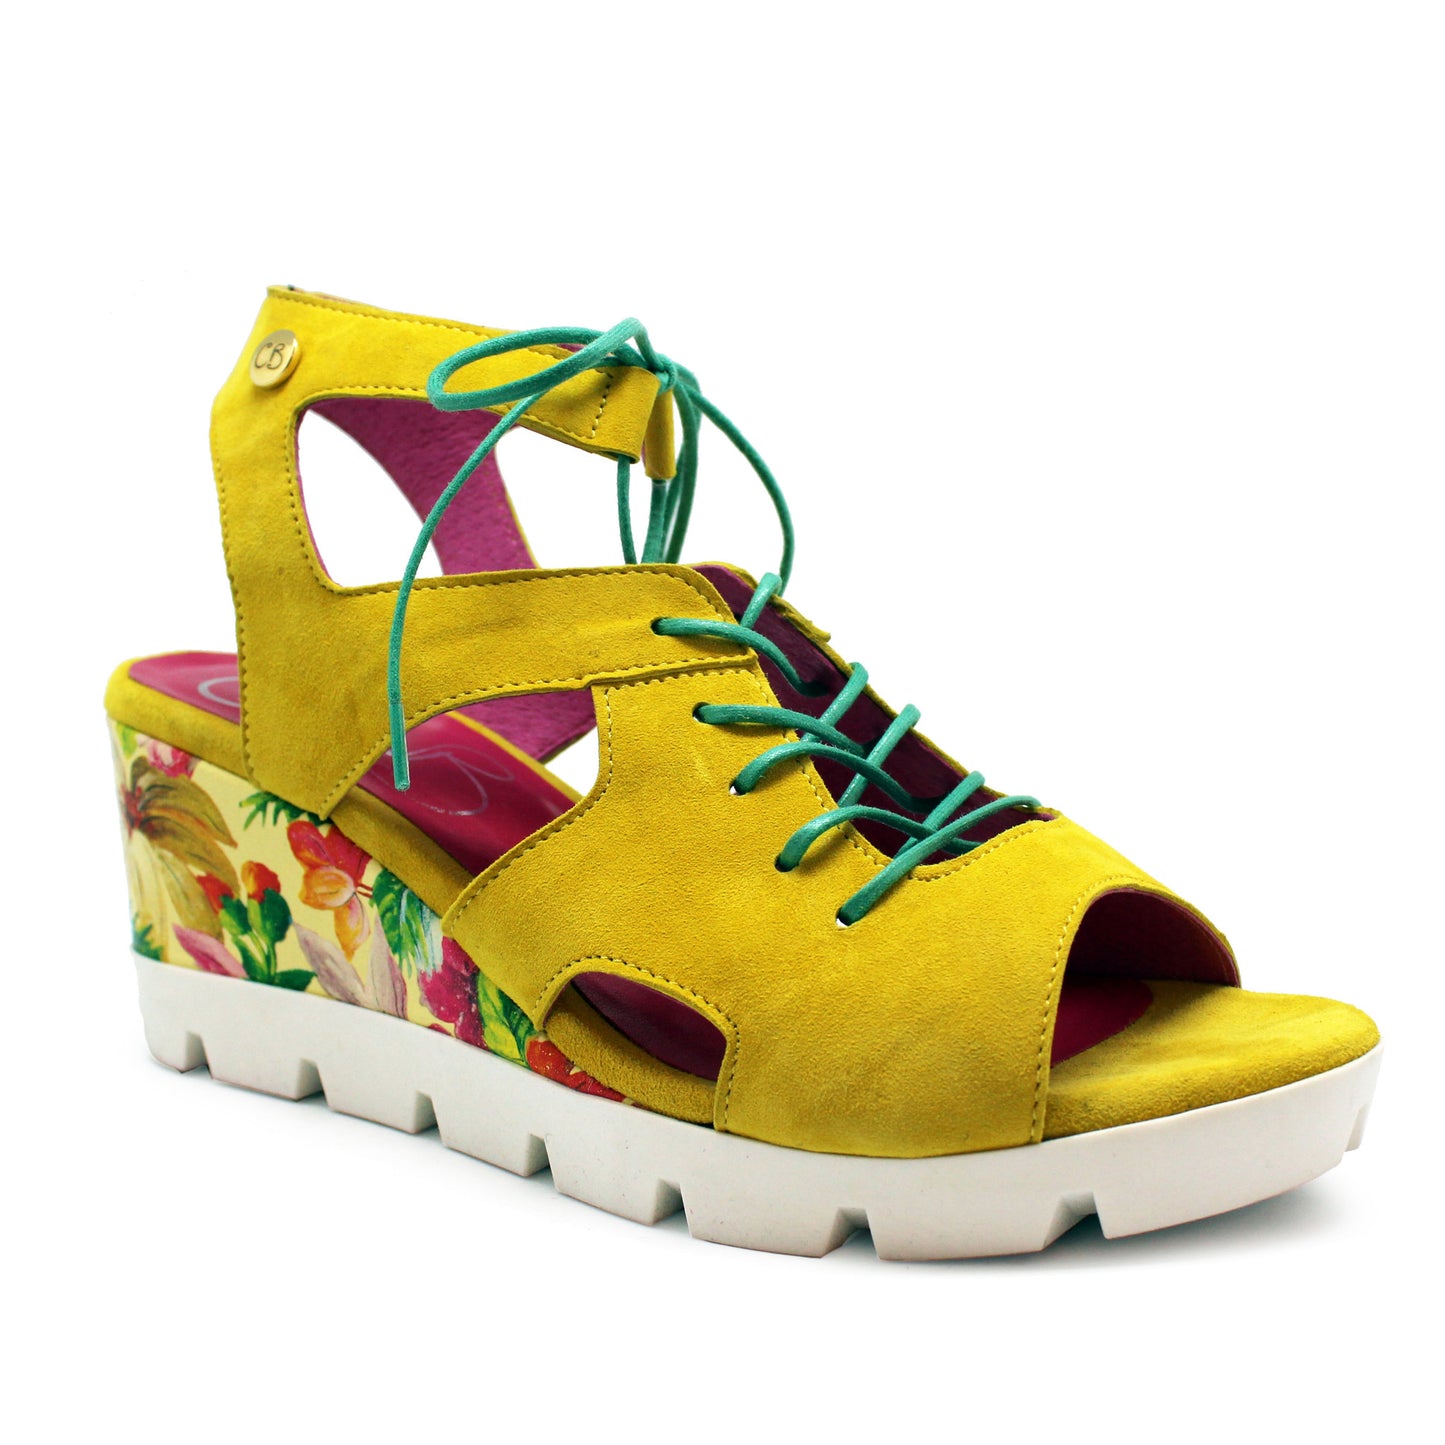 Sissors - Yellow wedge sandal